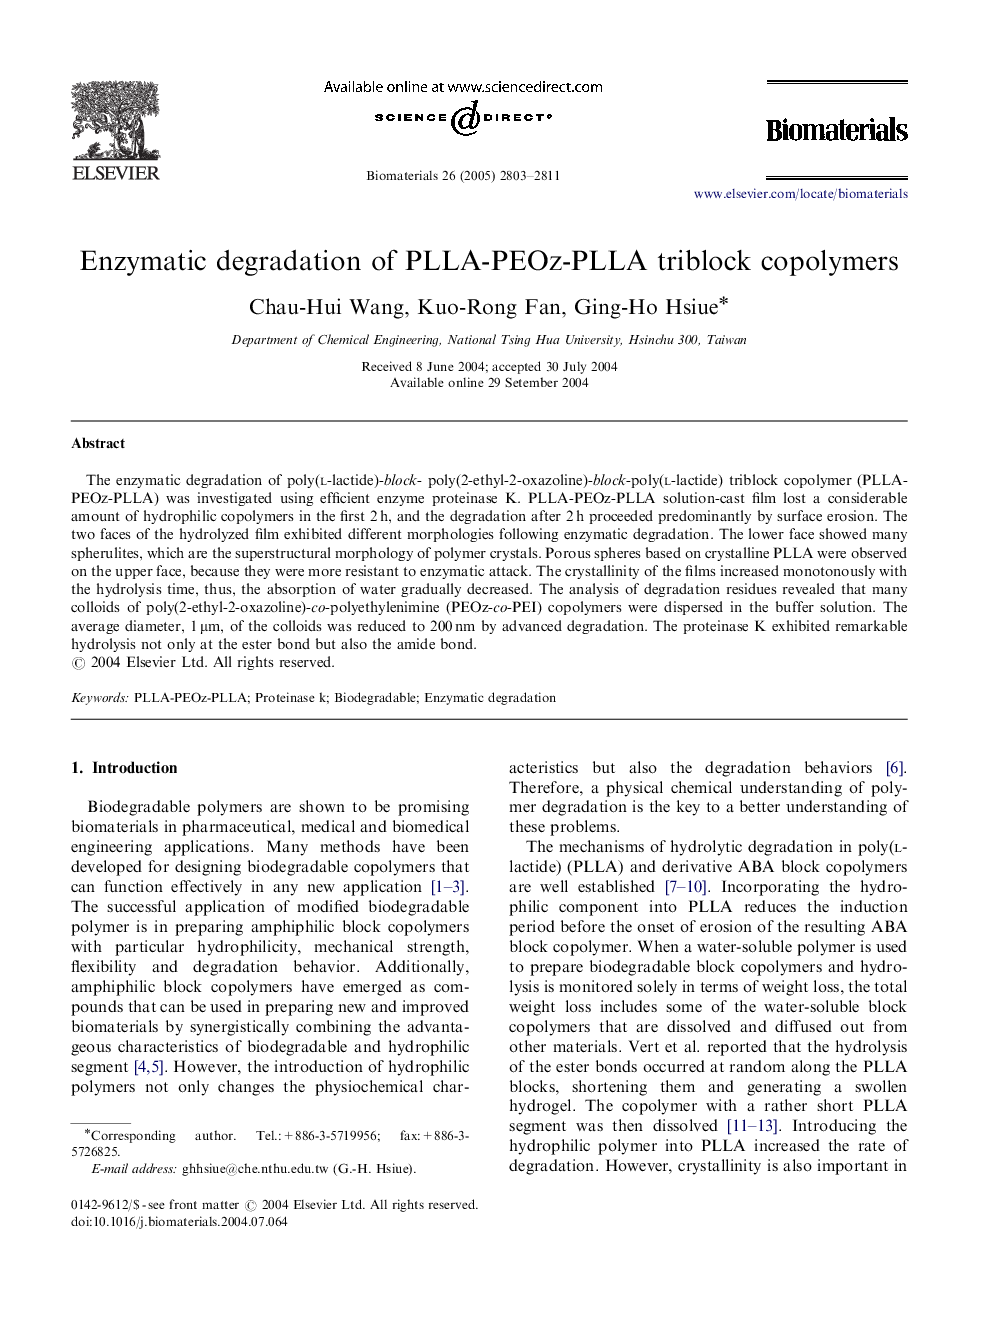 Enzymatic degradation of PLLA-PEOz-PLLA triblock copolymers